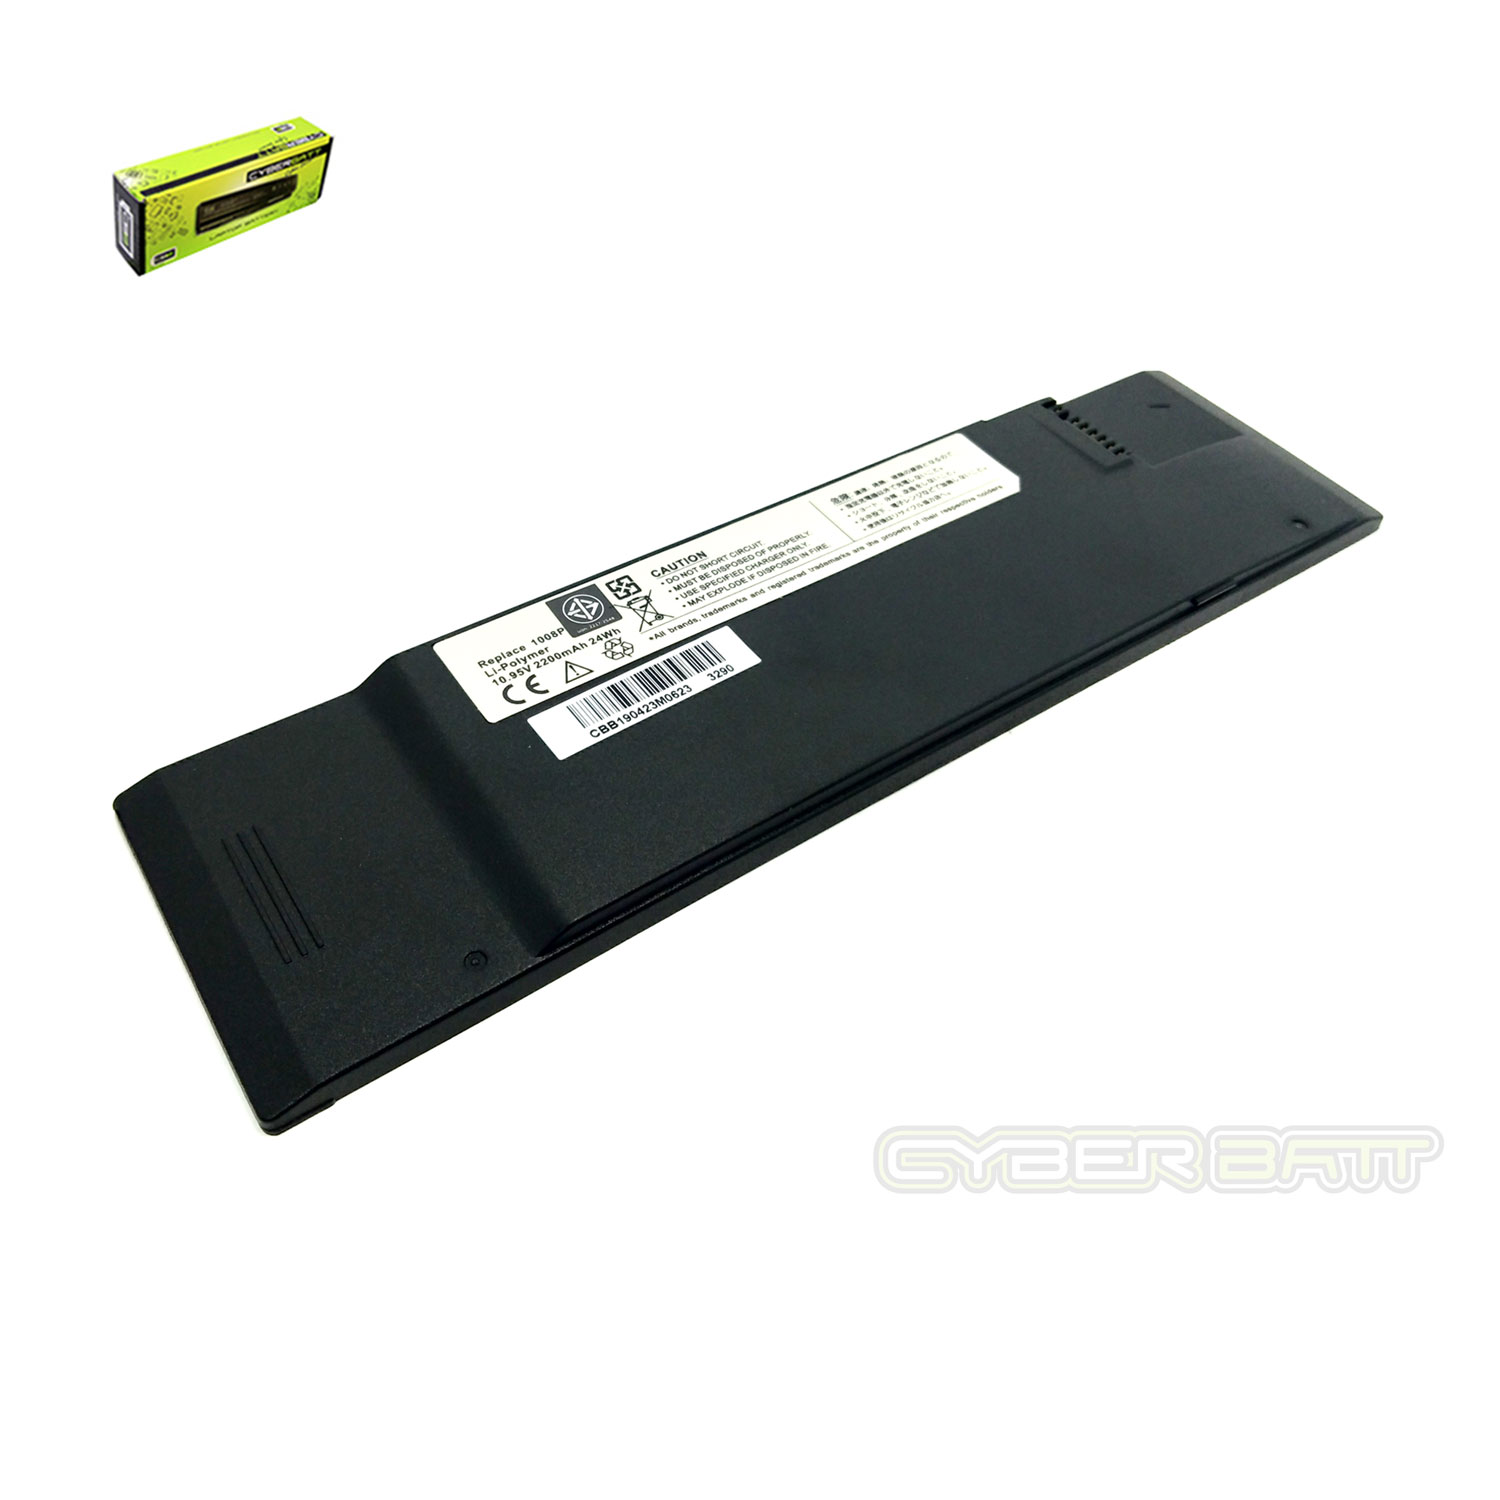 Battery Asus Eee PC 1008P 1008P-3S1P : 10.95 V-2200mAh Black (CBB)